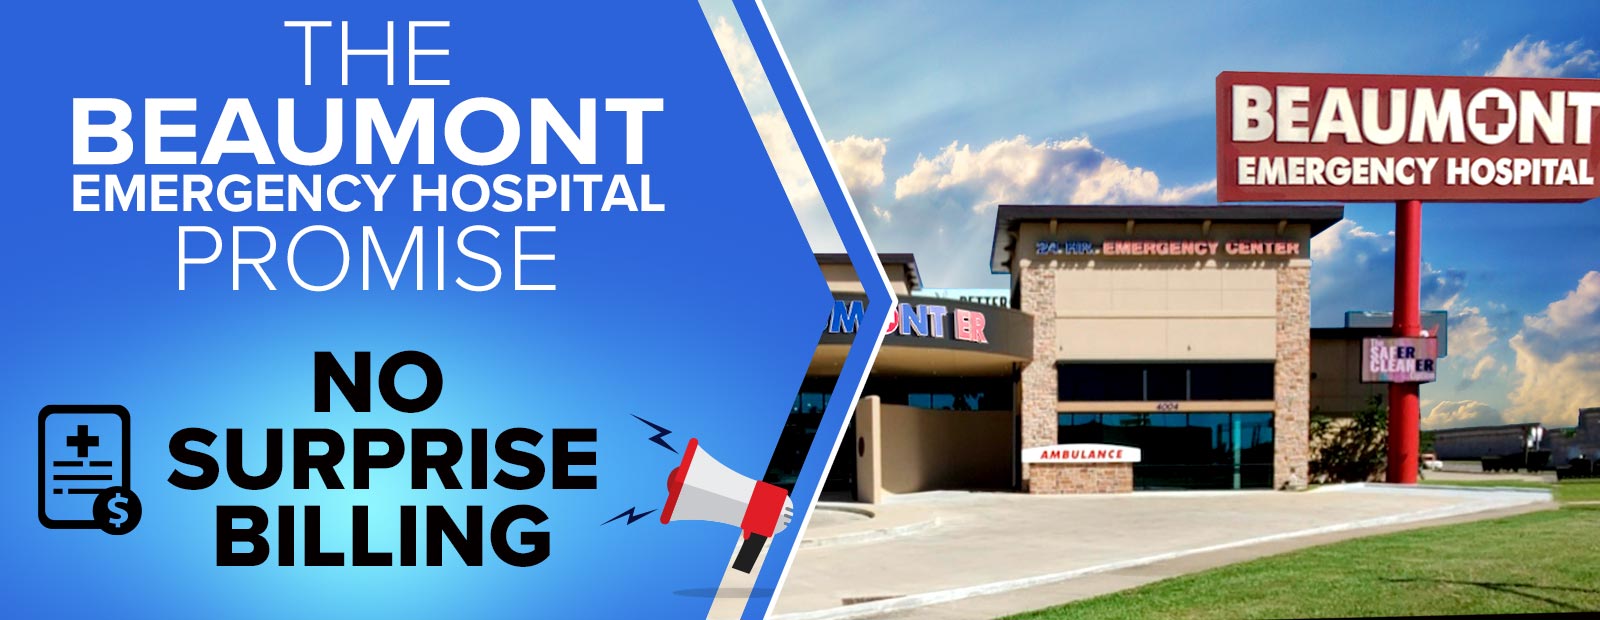 Beaumont Emergency Hospital - No Surprise Billing